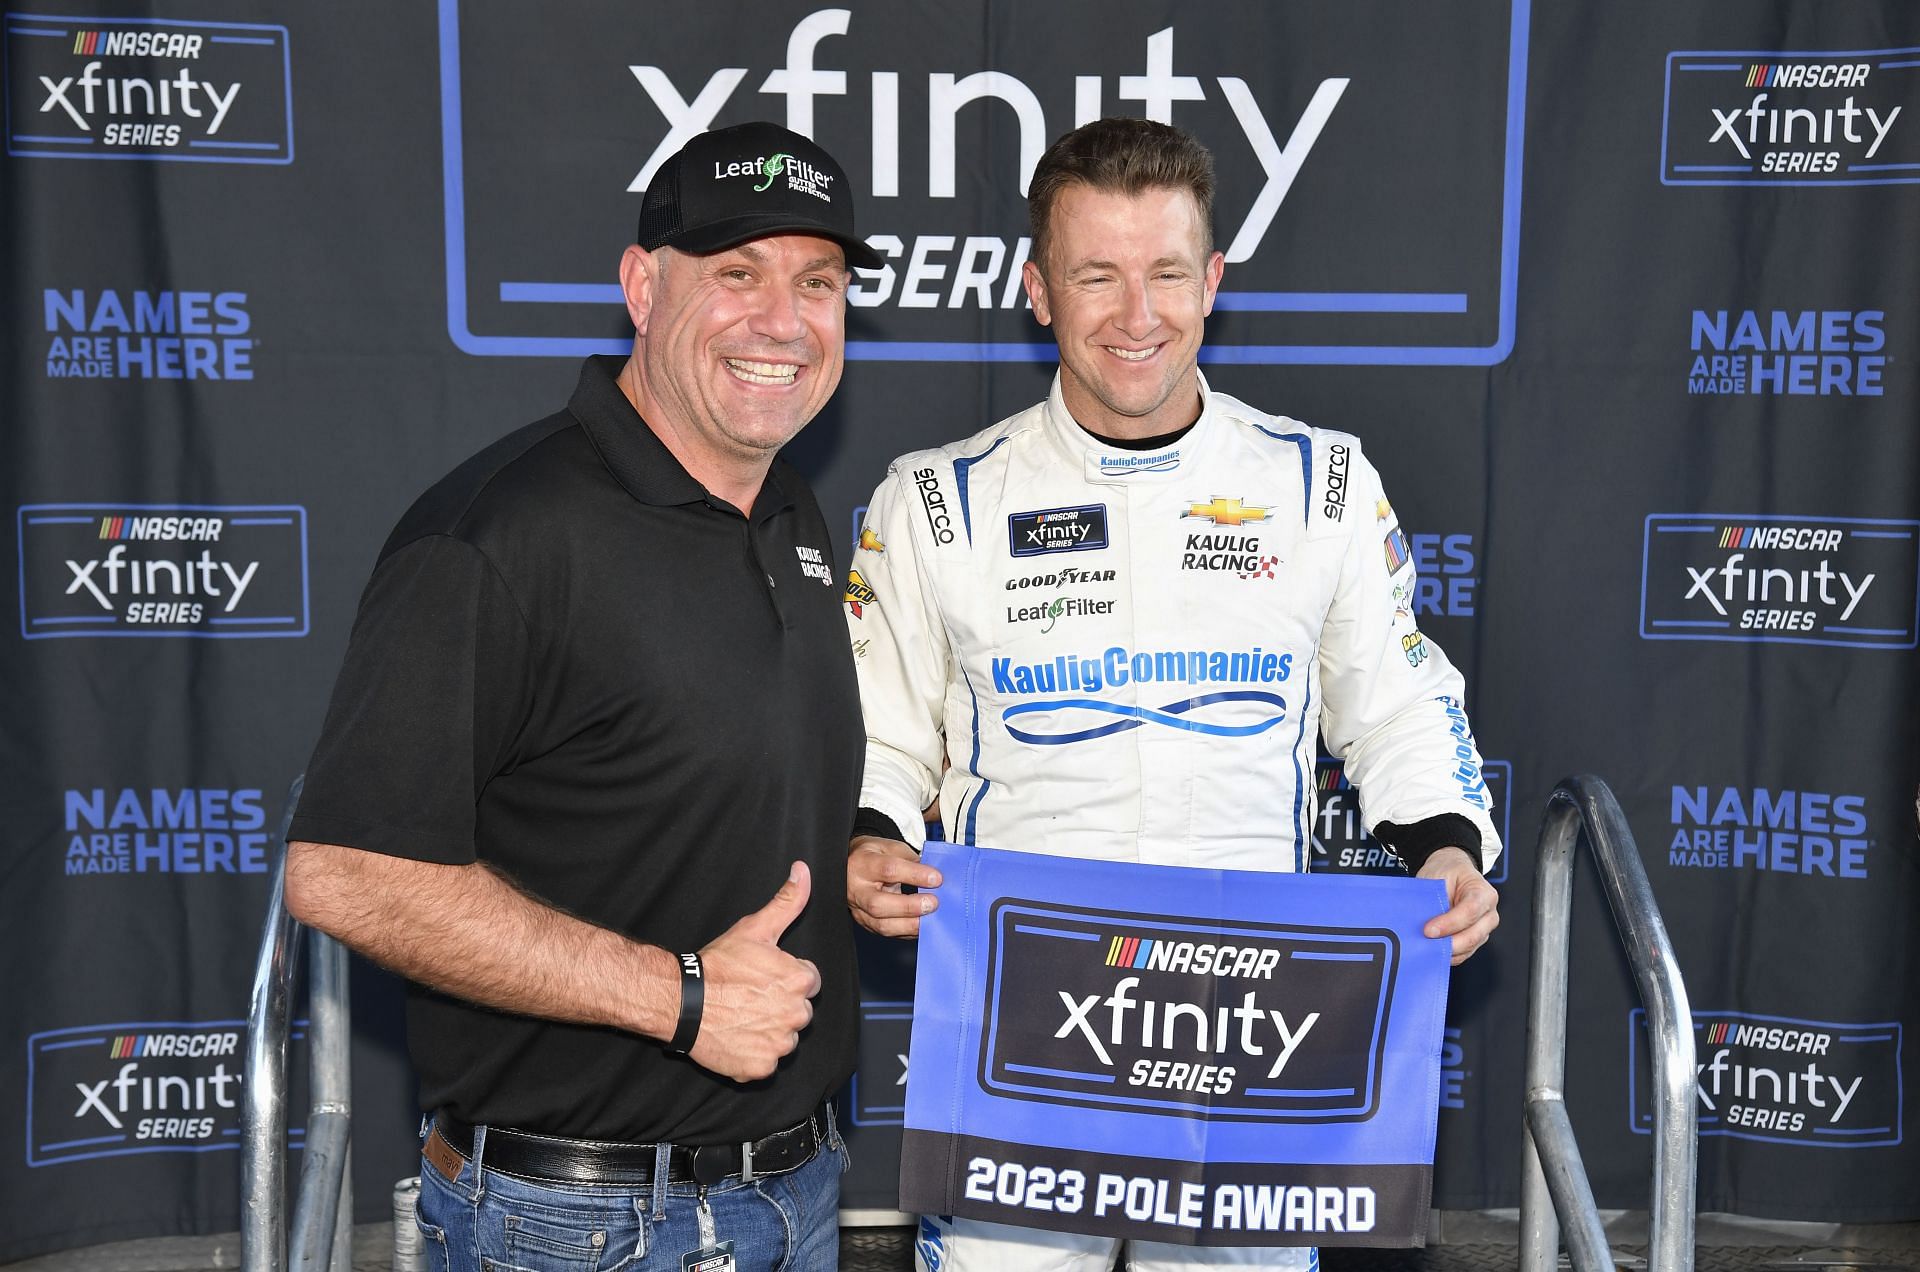 NASCAR Xfinity Series Pit Boss 250 - Practice